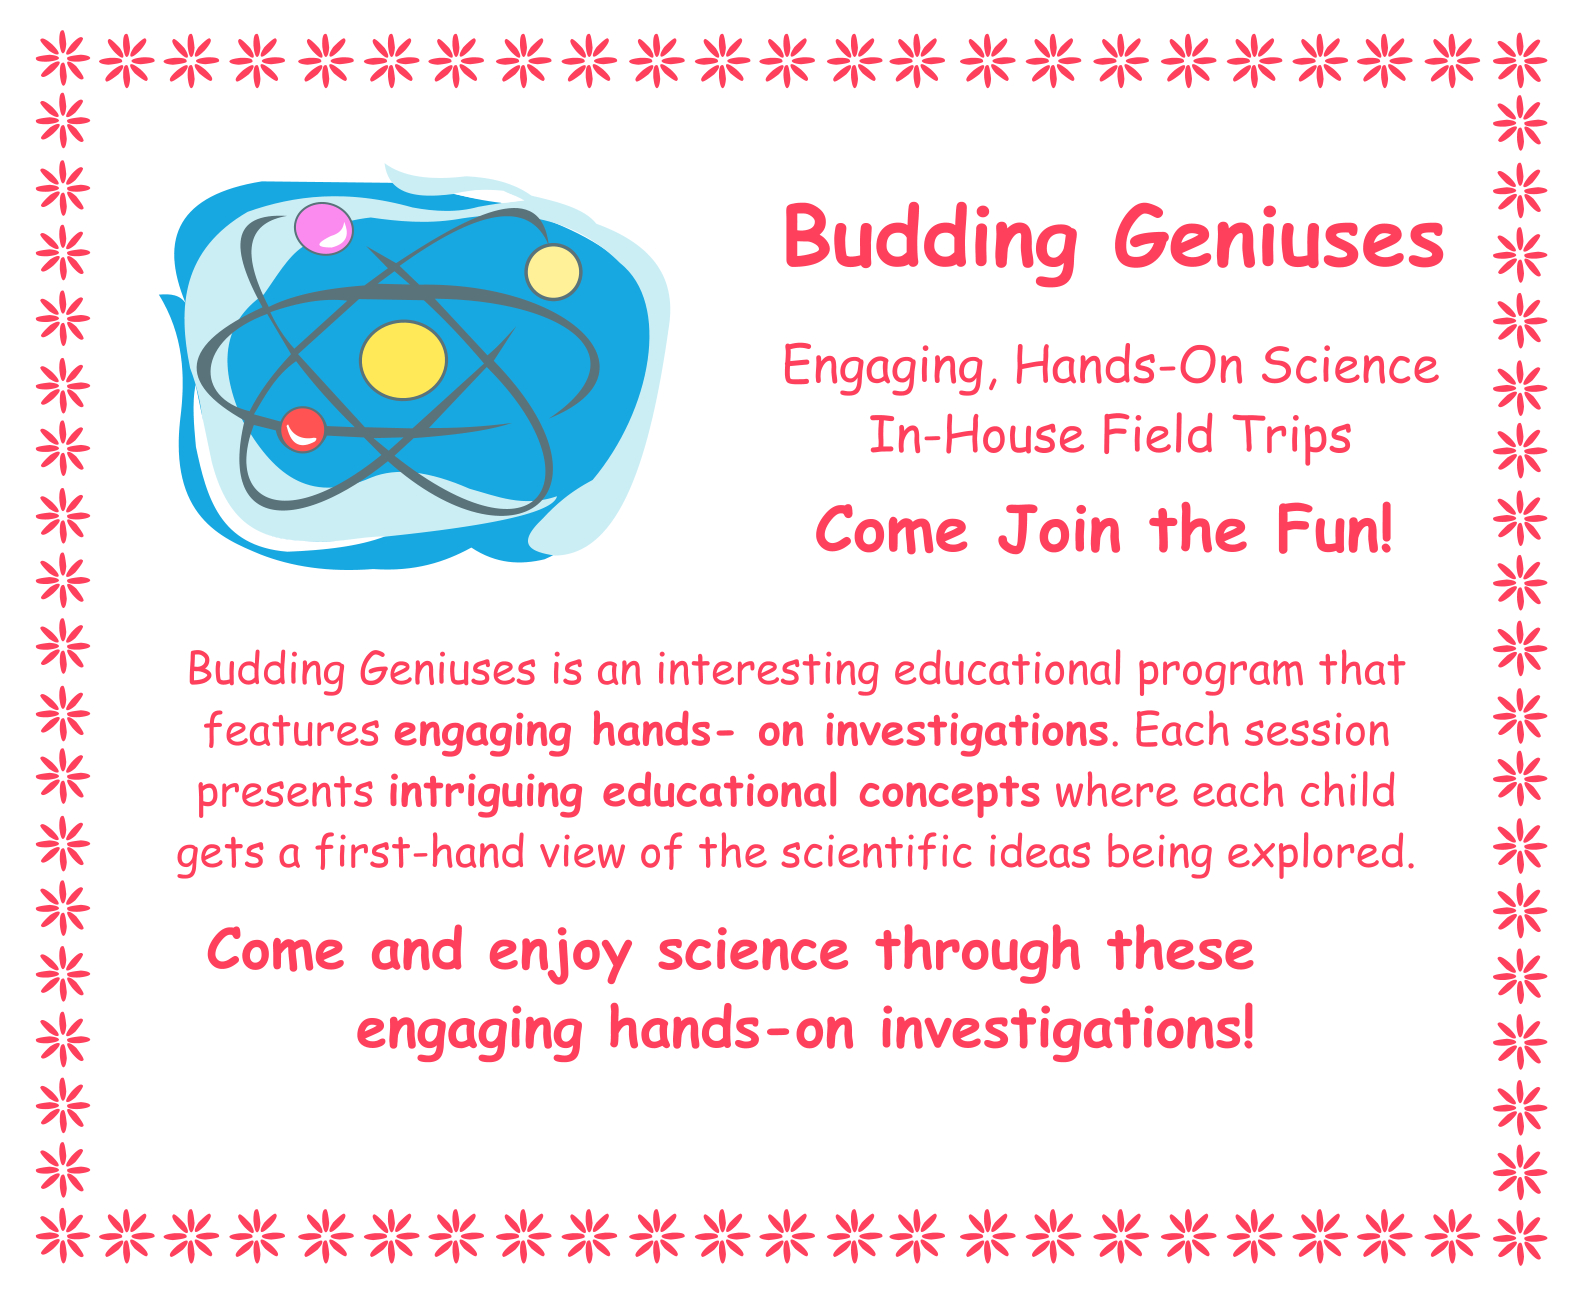 Buddling Genius Science Lessons